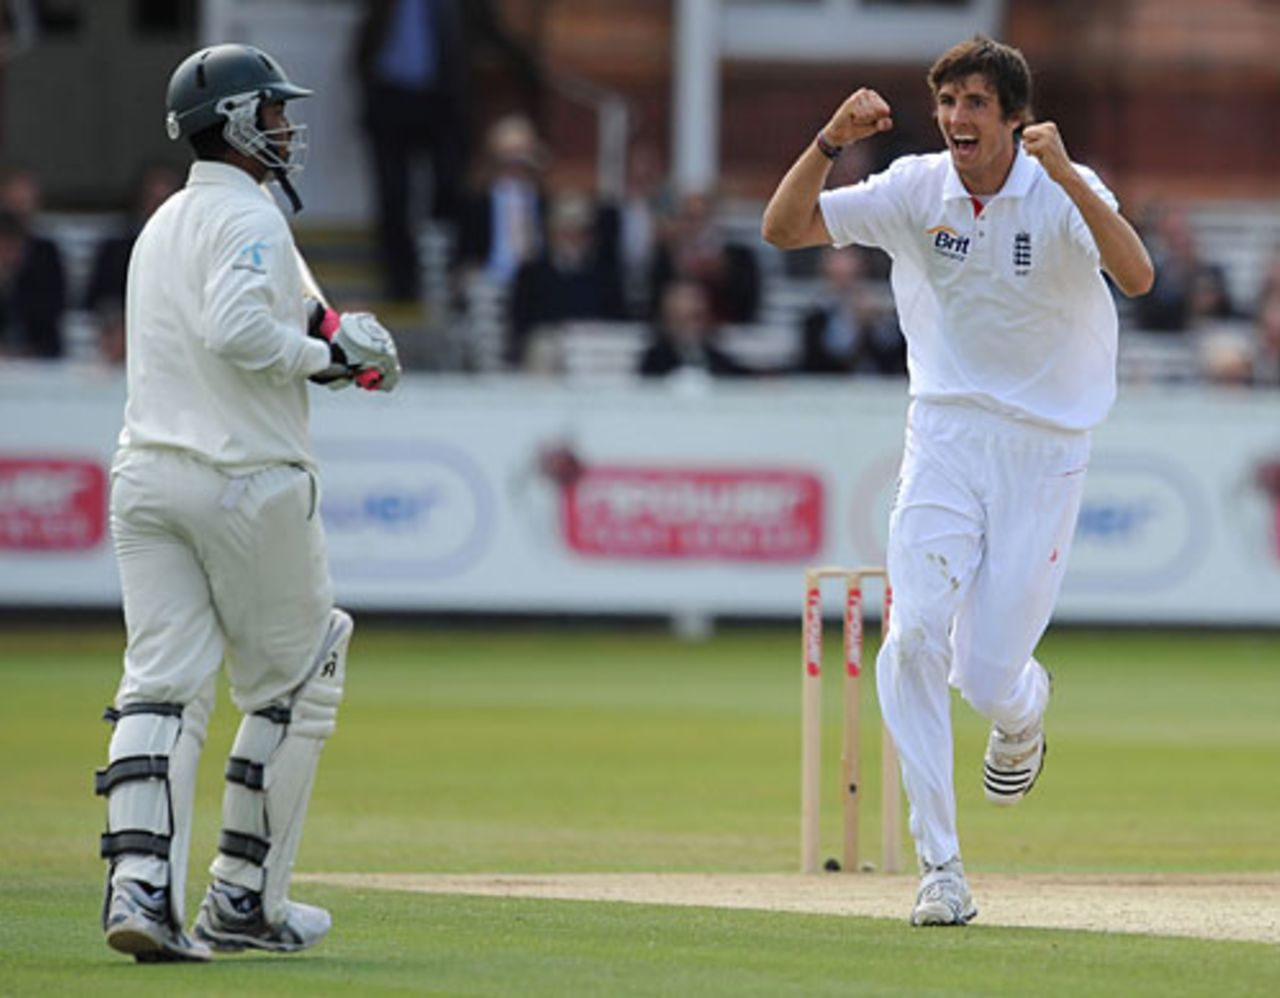 Steven Finn celebrates removing Tamim Iqbal for 103, England v Bangladesh, 1st Test, Lord's, May 30, 2010 
